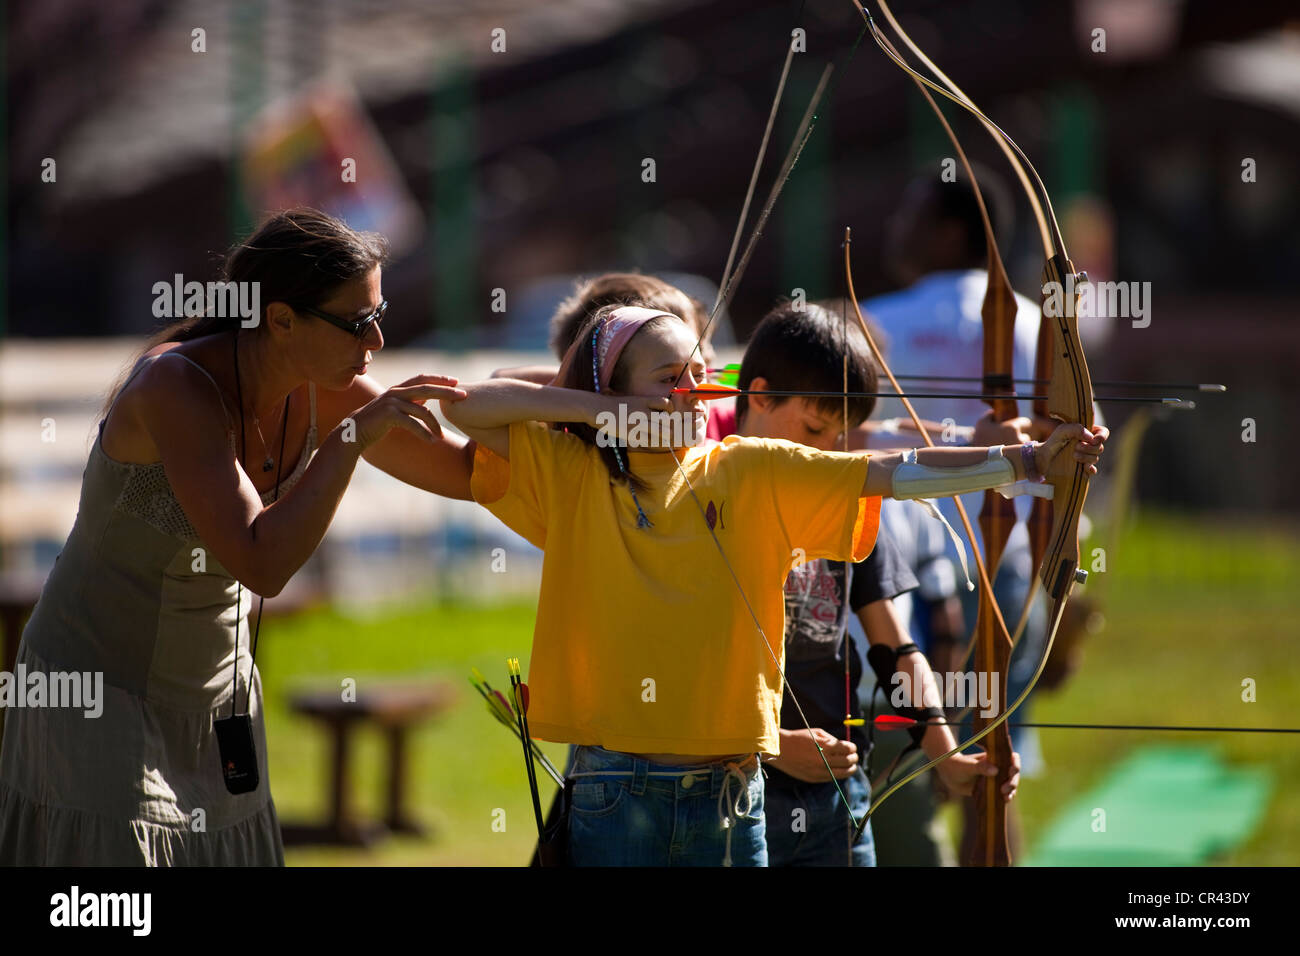 France, Savoie, Valmorel, Archery practice Stock Photo